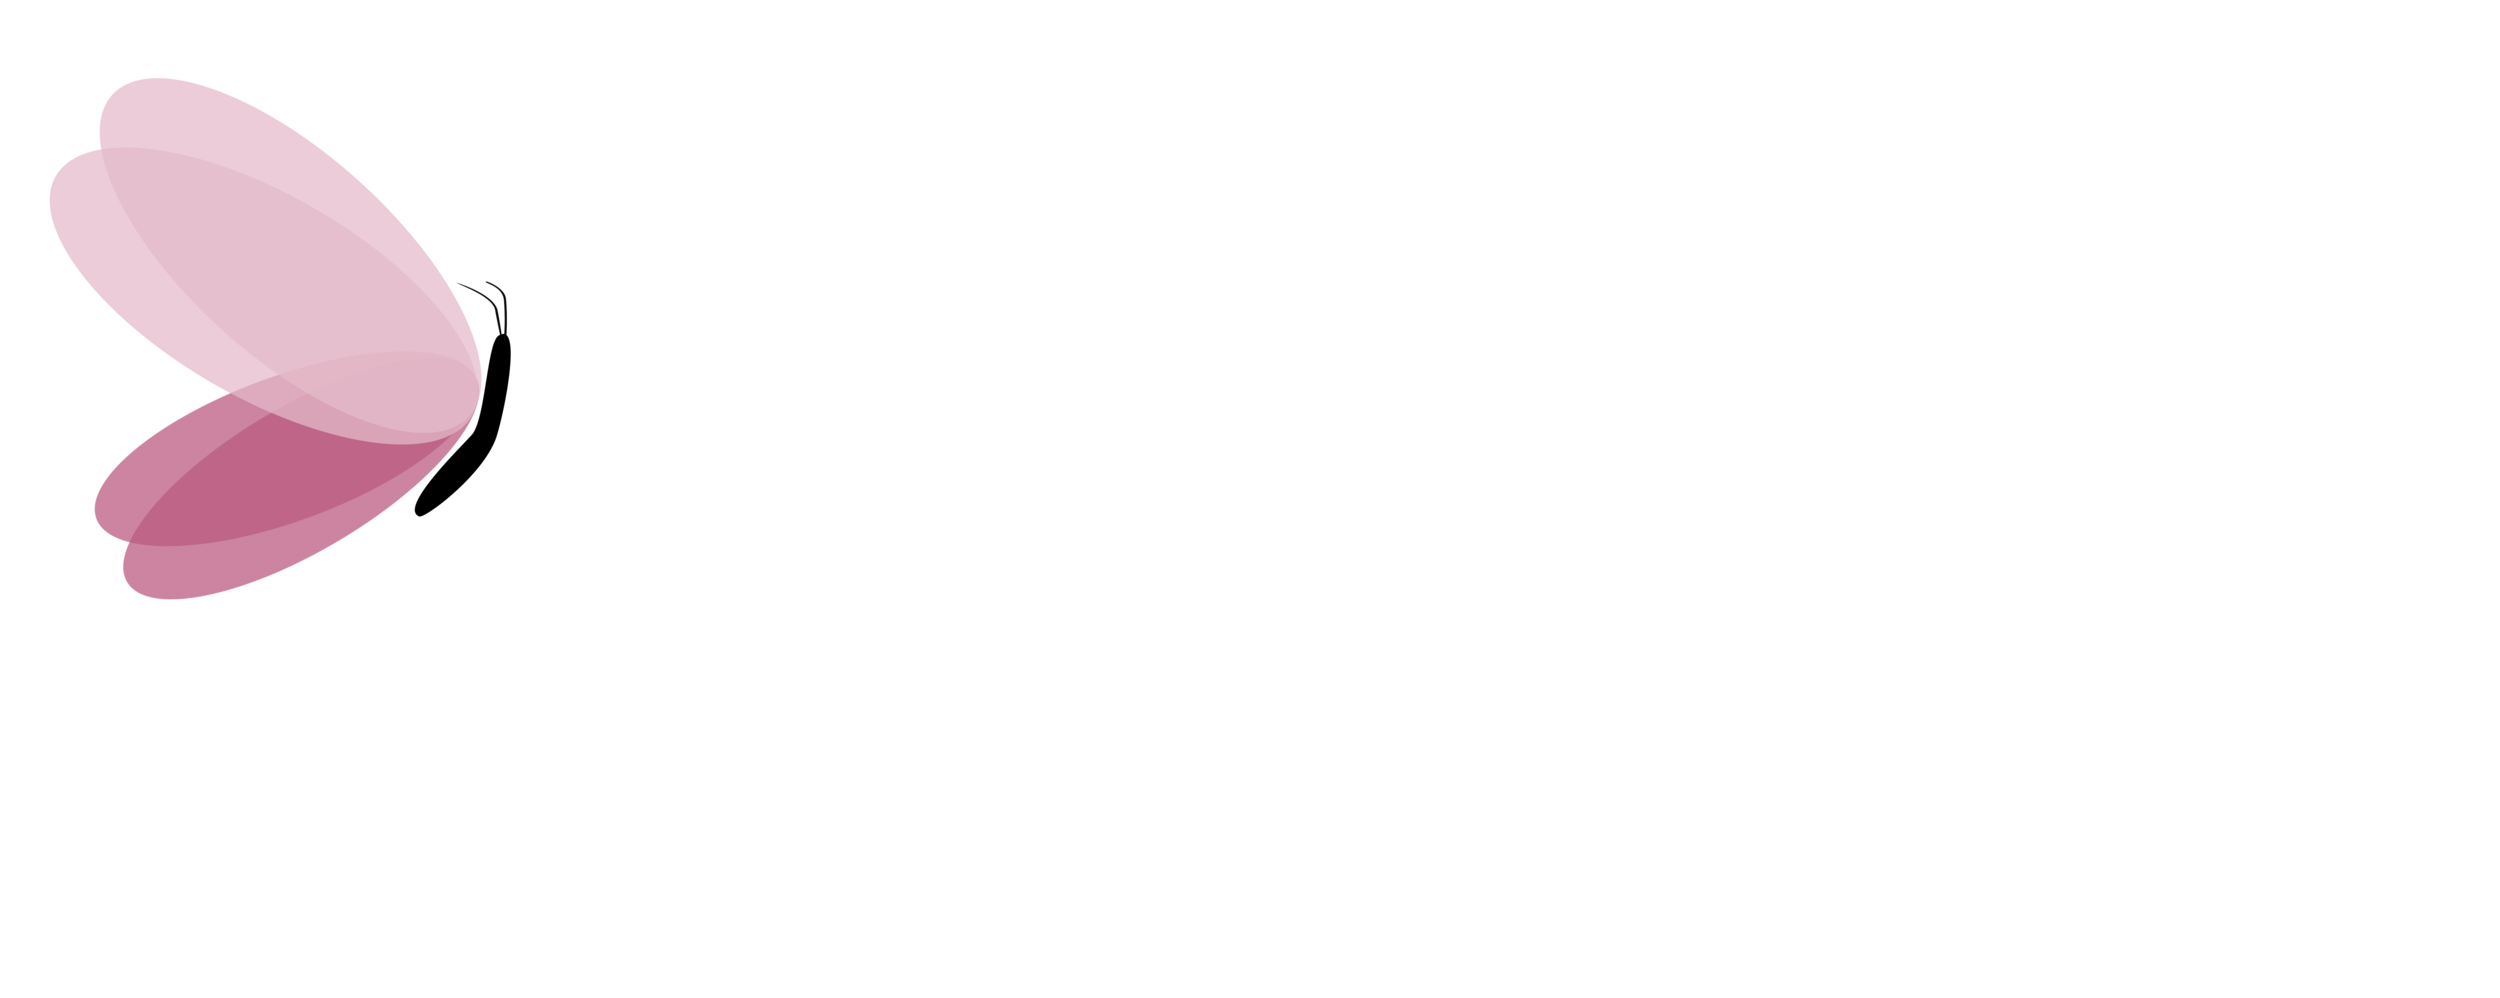 Hana Spa Products Nail Polish Remover 100% Pure Acetone 1 Gallon